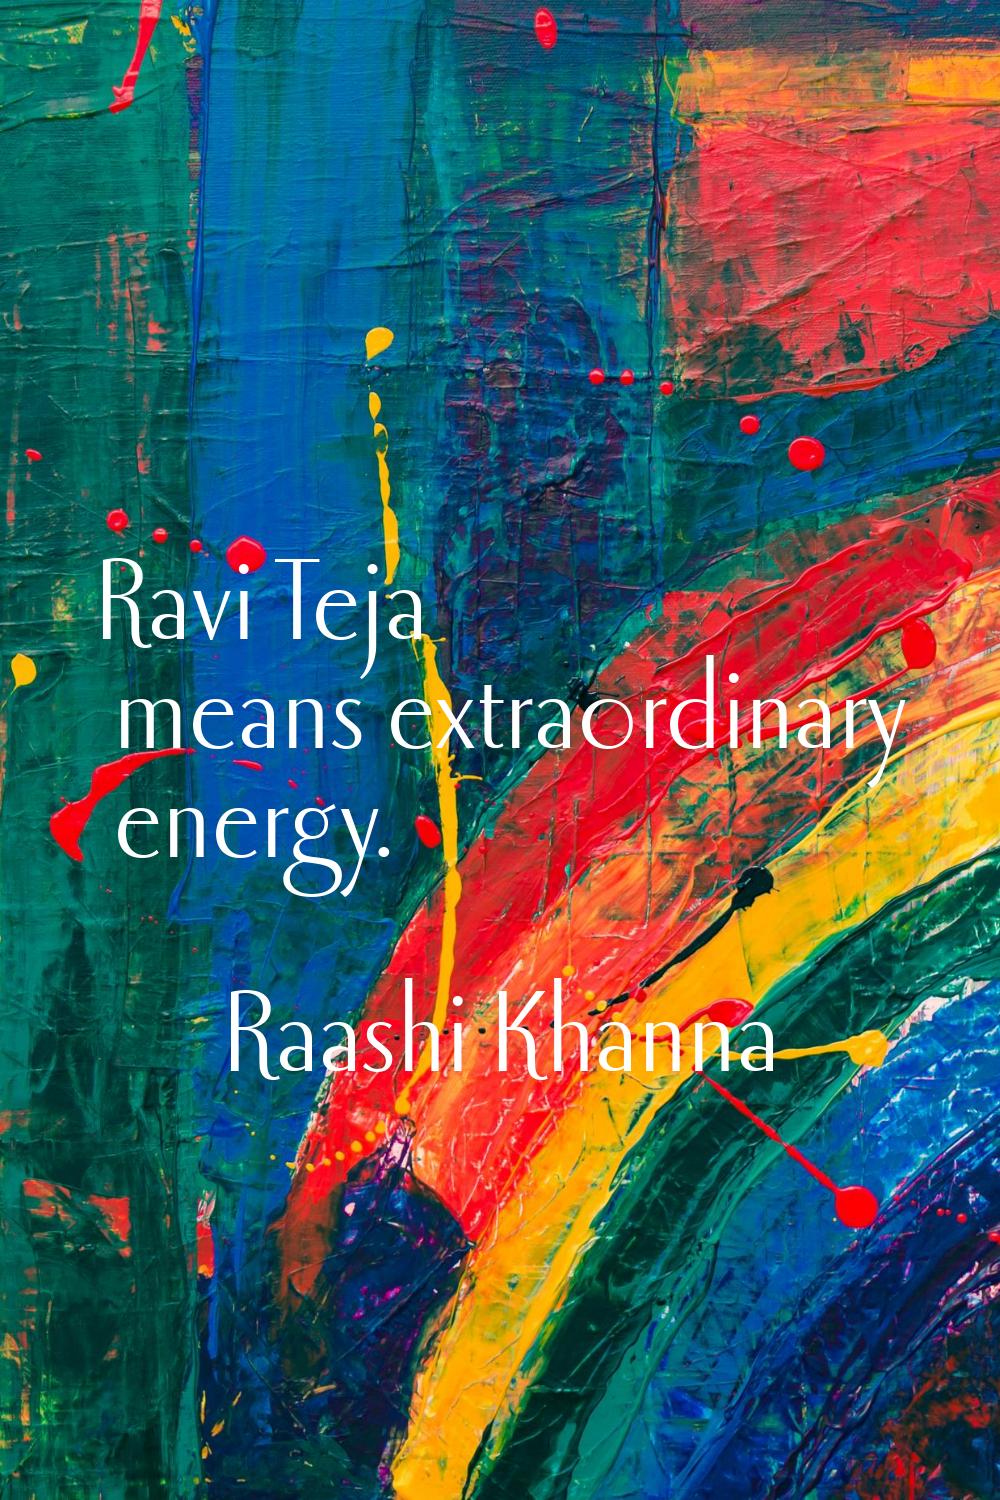 Ravi Teja means extraordinary energy.